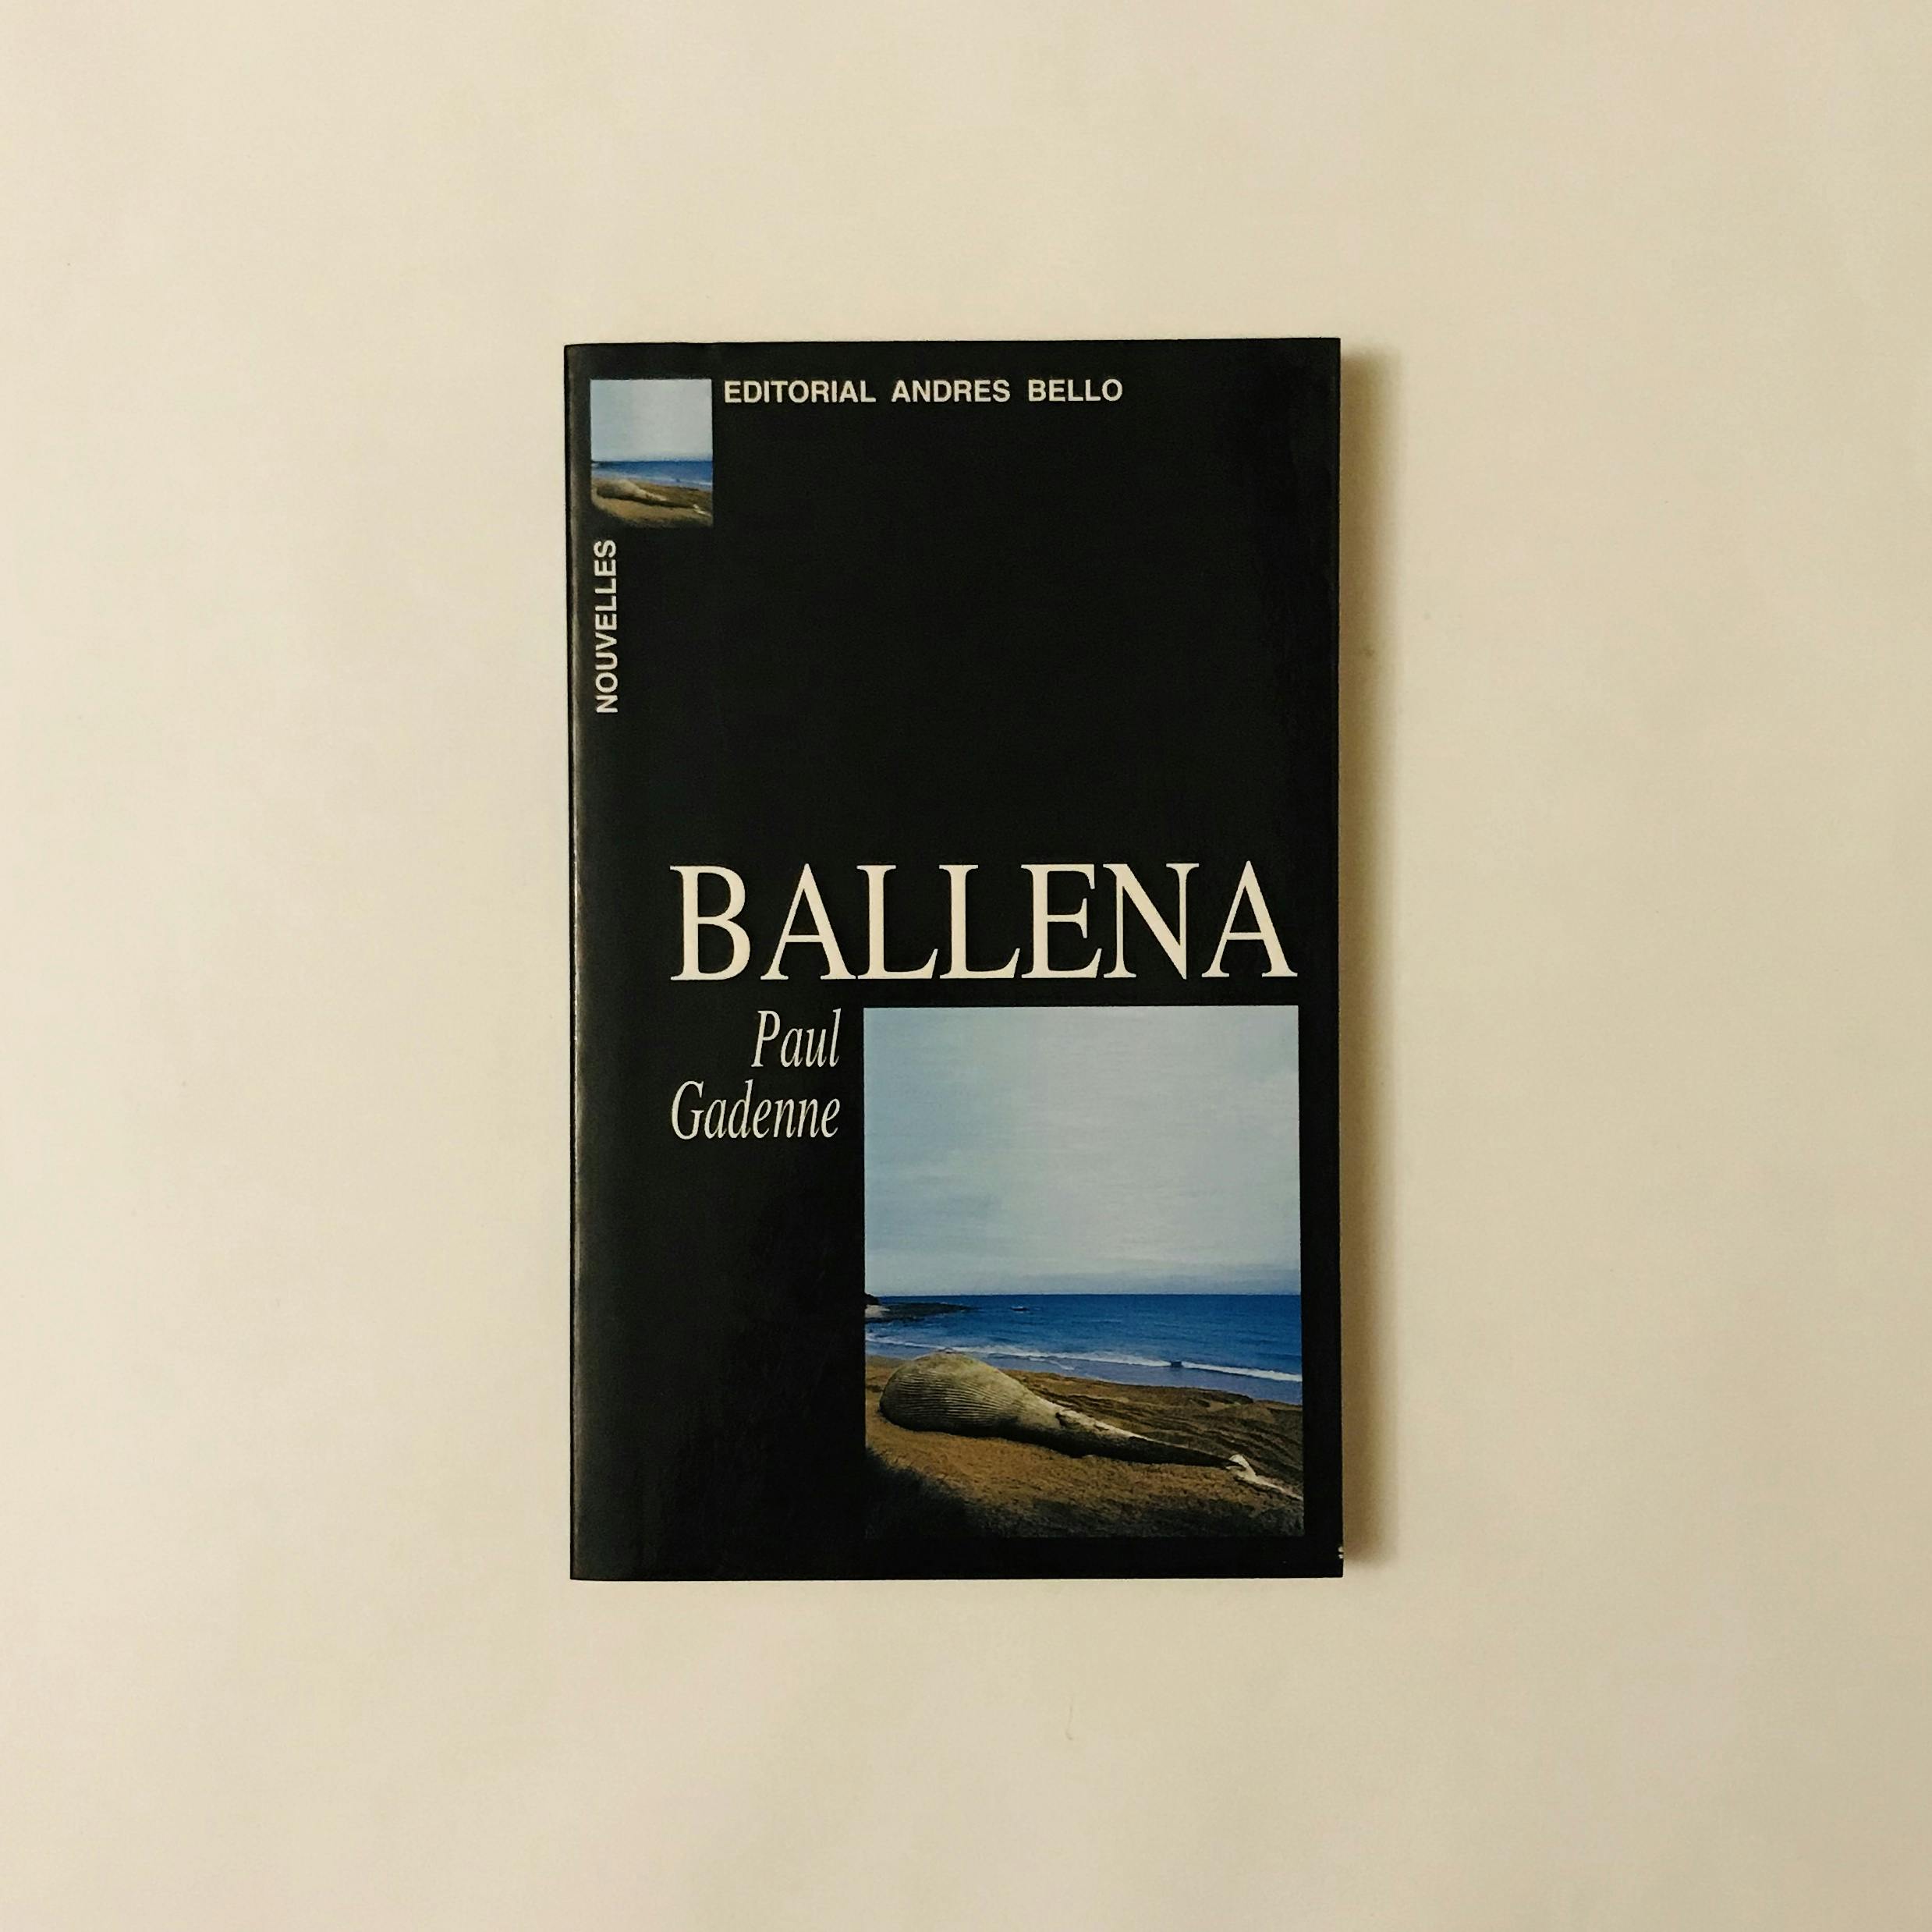 "BALLENA", de Paul Gadenne